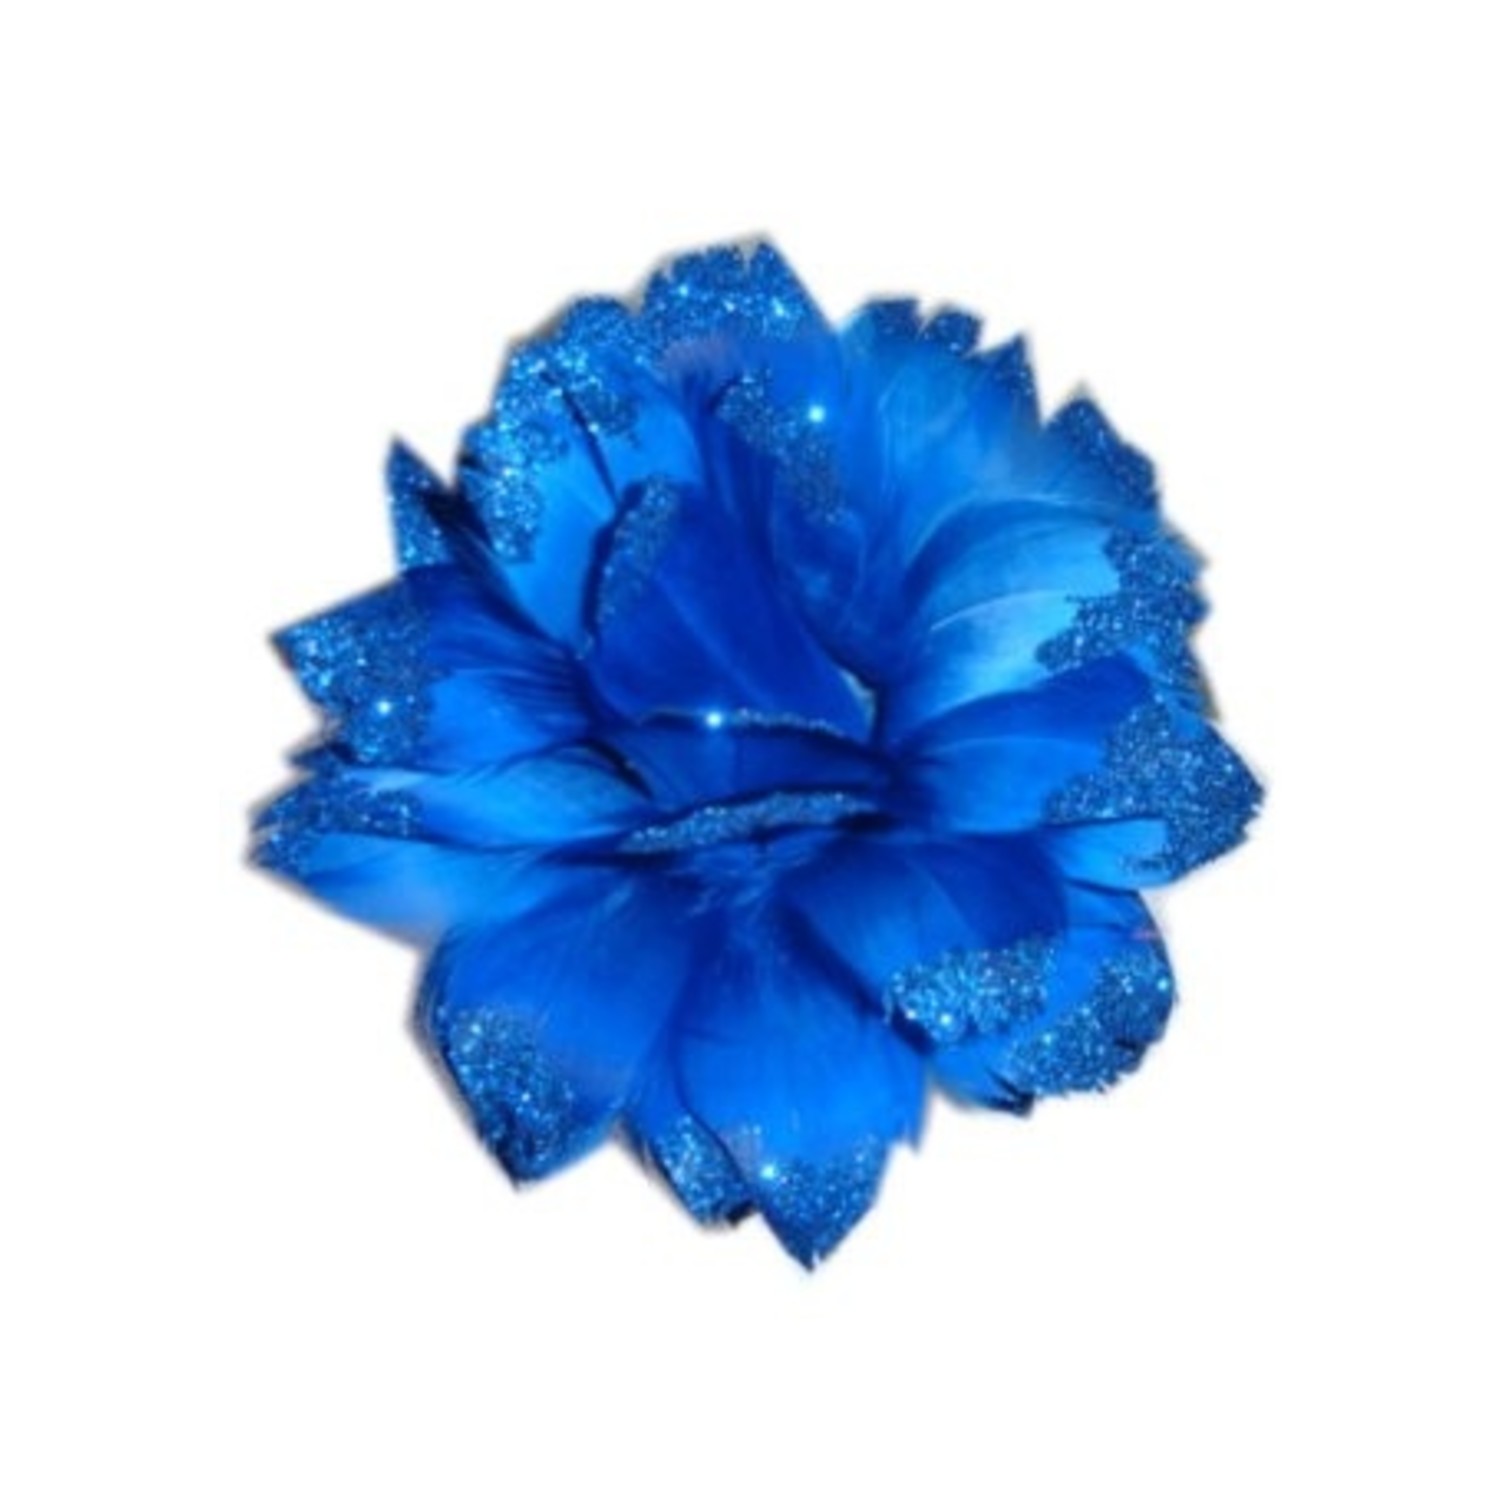 Blauwe bloem als decoratie e-Carnavalskleding